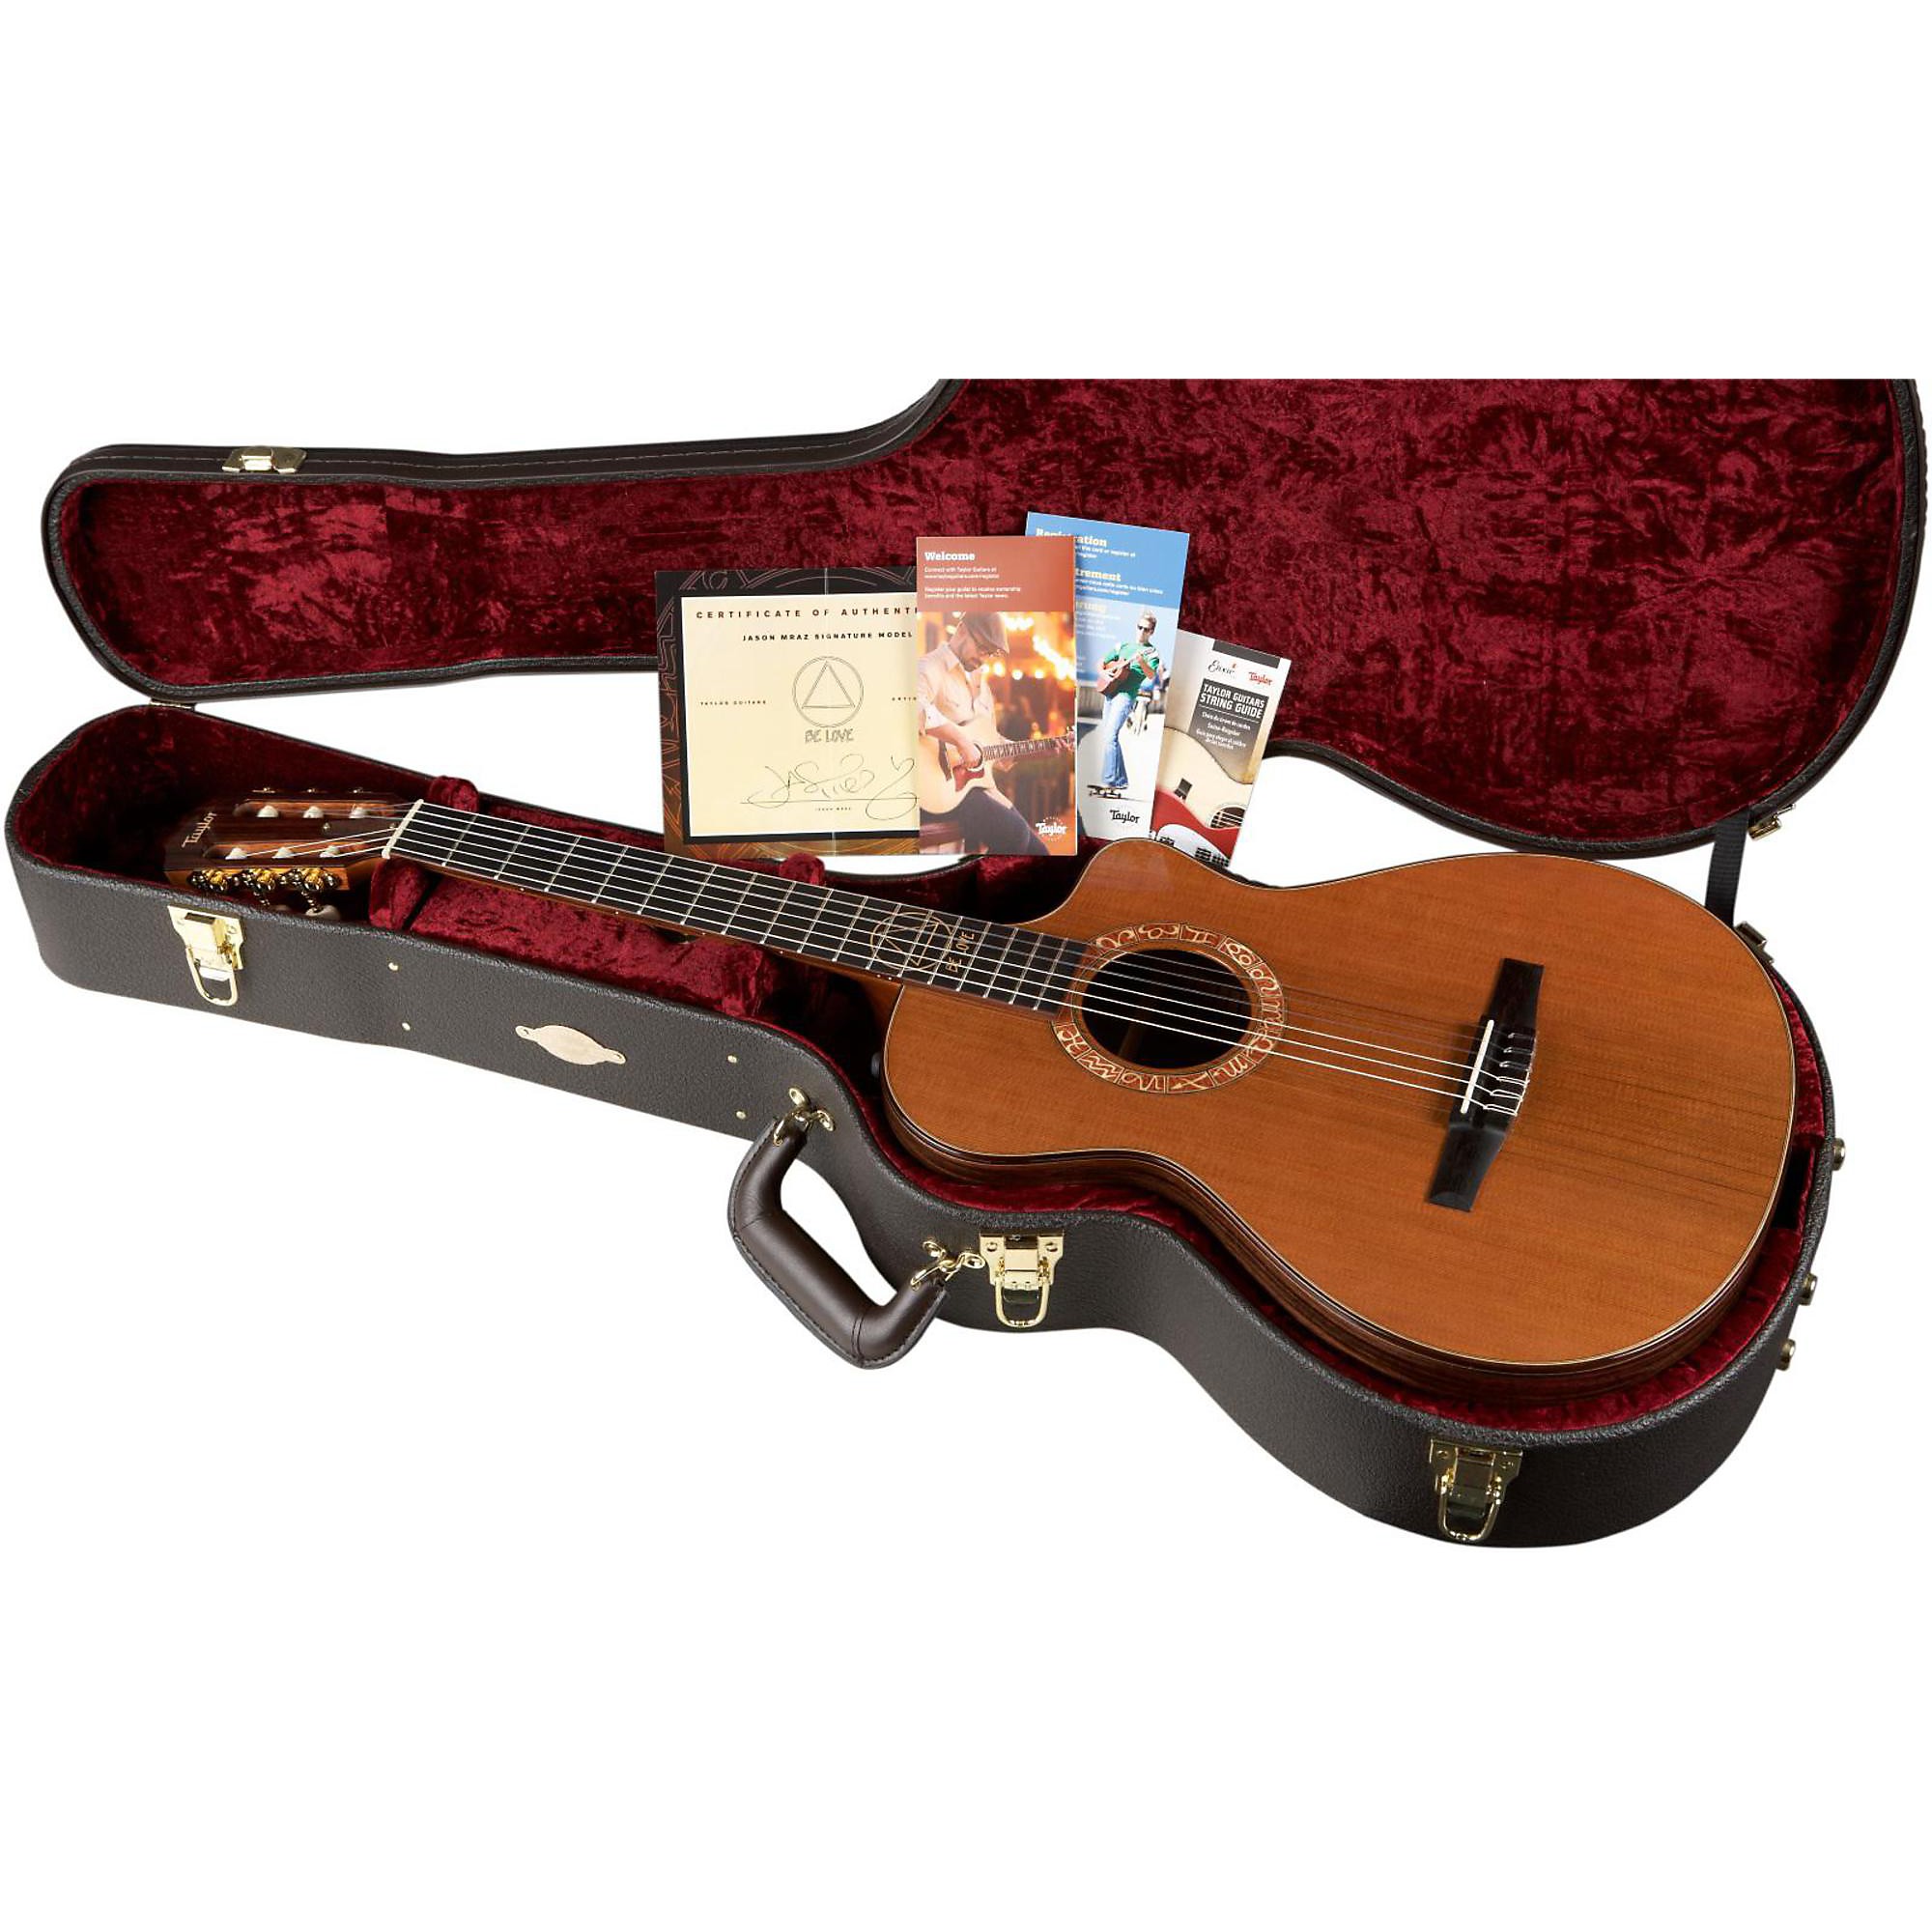 Taylor JMSM Jason Mraz Signature Model Grand Concert Акустически-электрическая гитара Natural